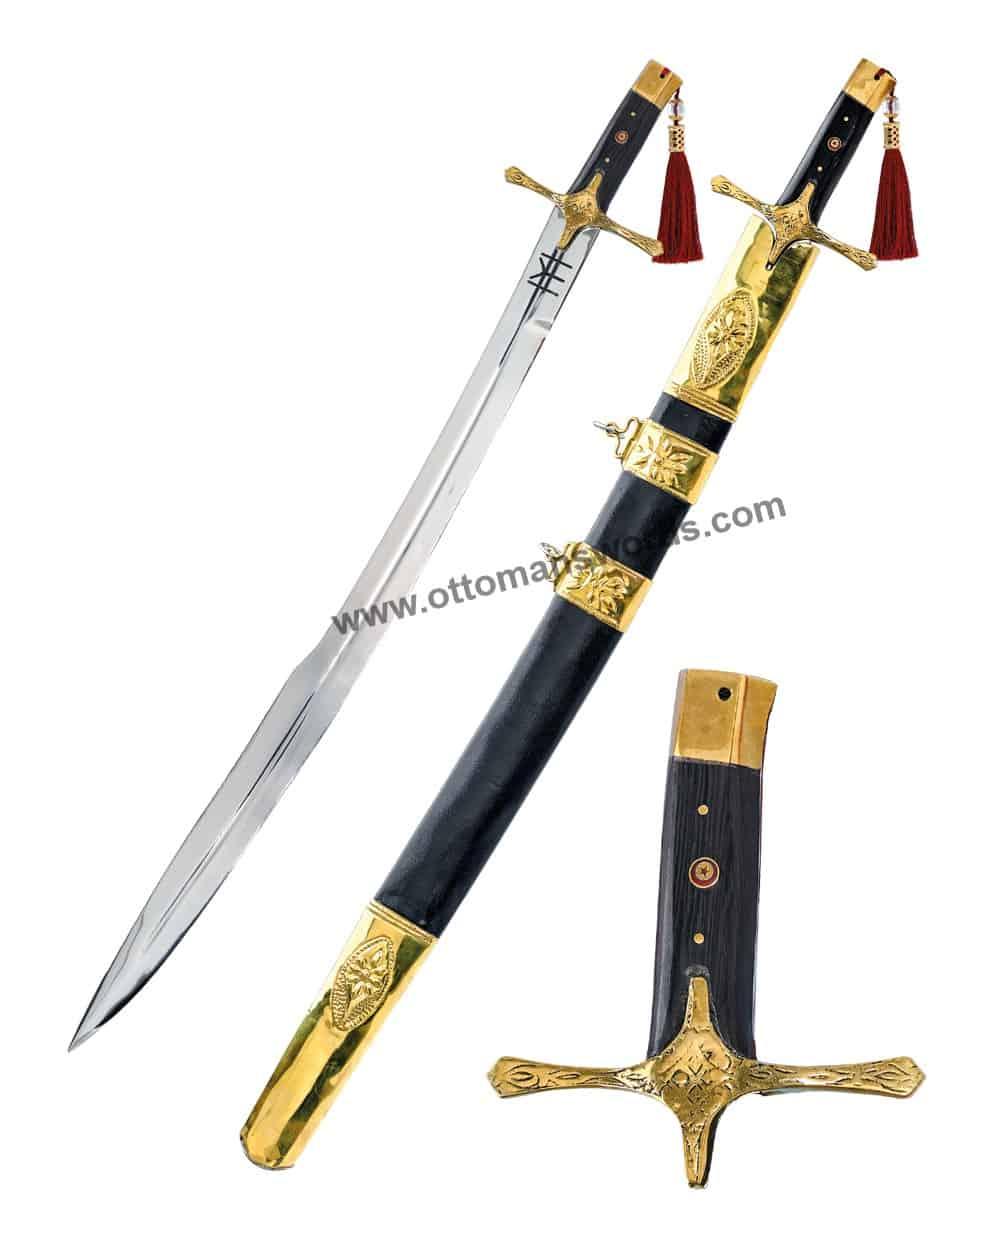 sword of ertugrul ghazi online shop official